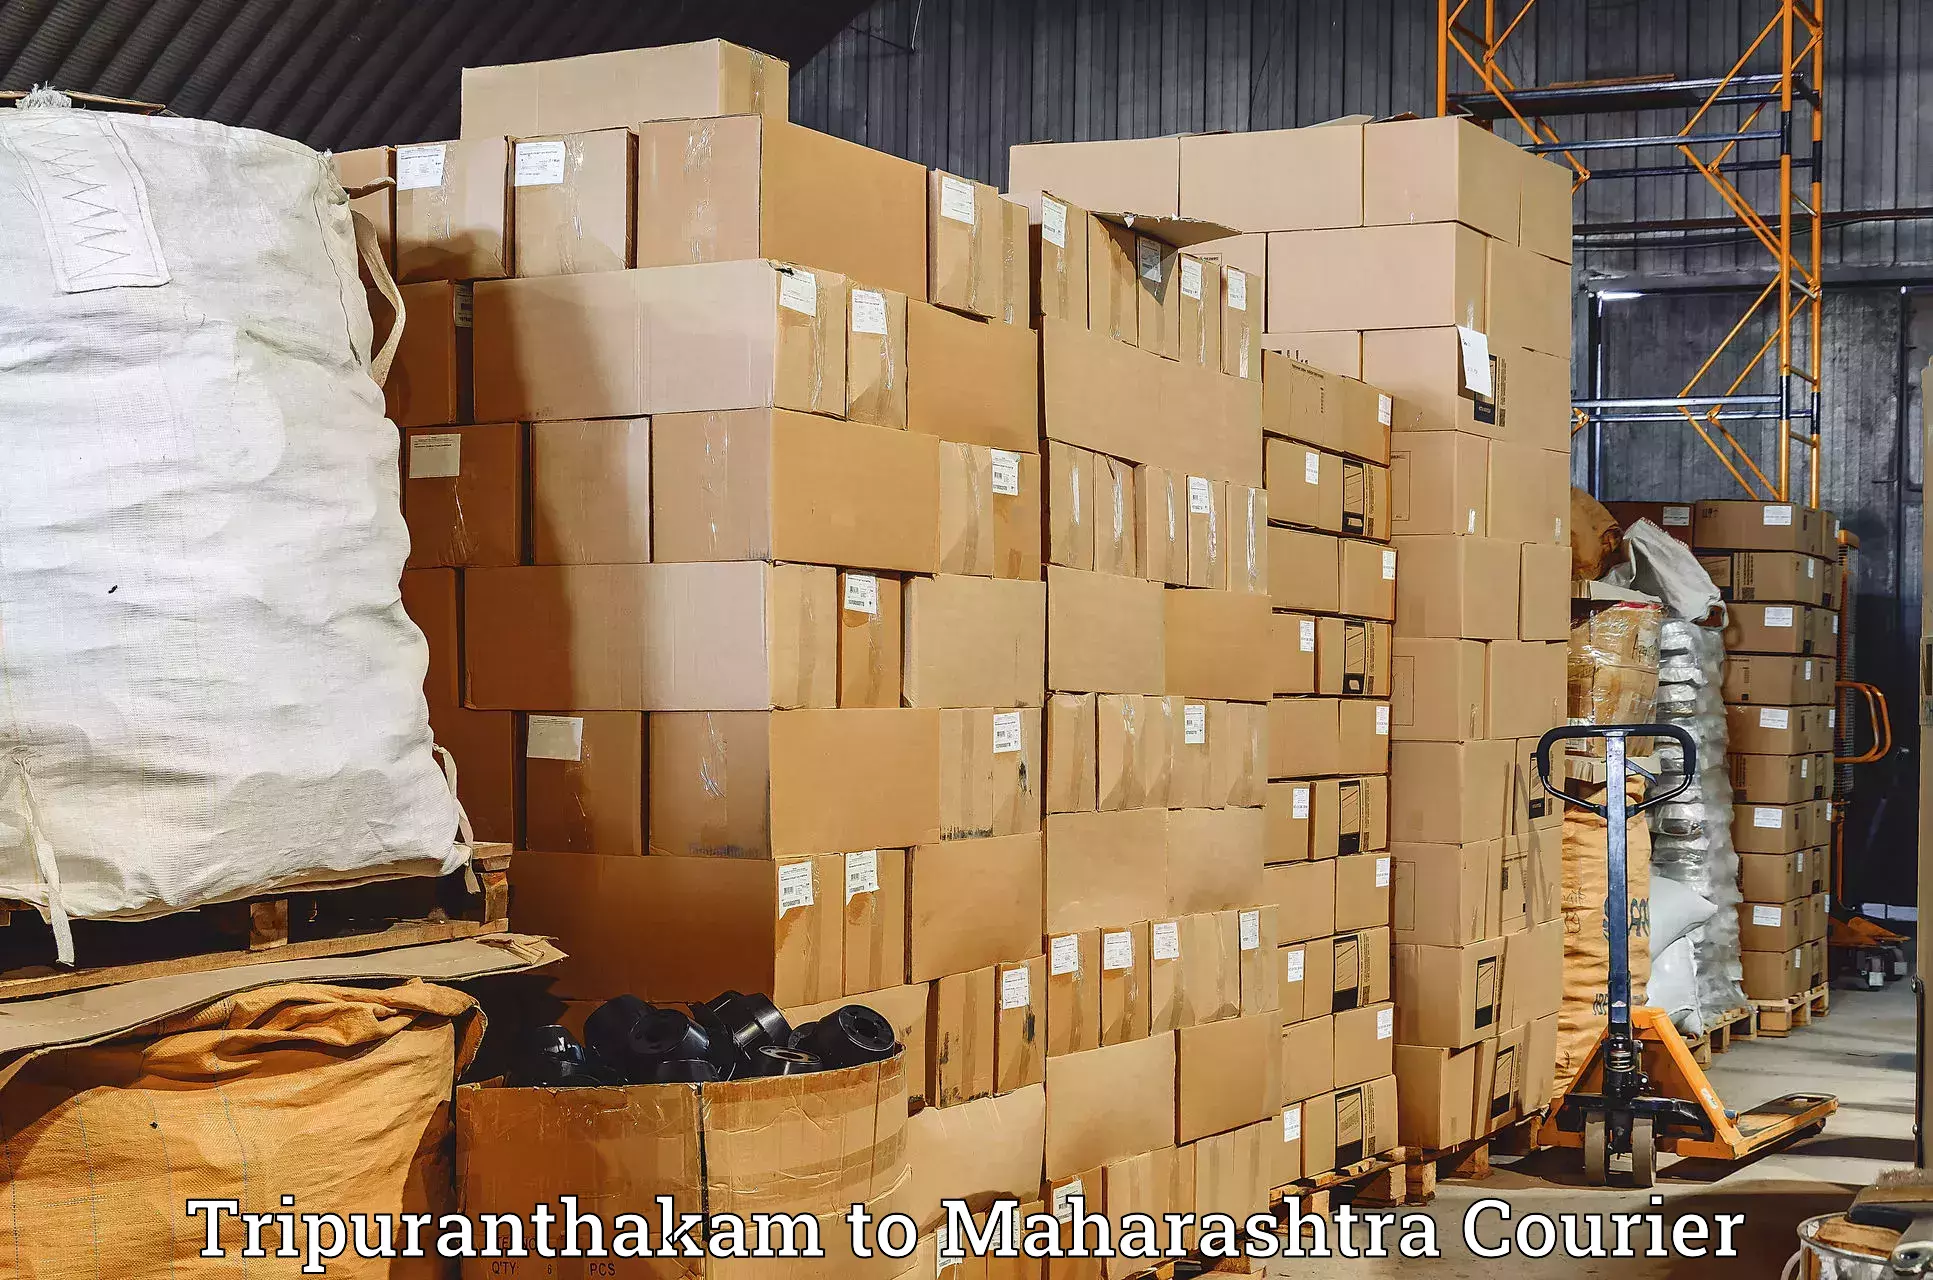 Global shipping networks Tripuranthakam to Pune